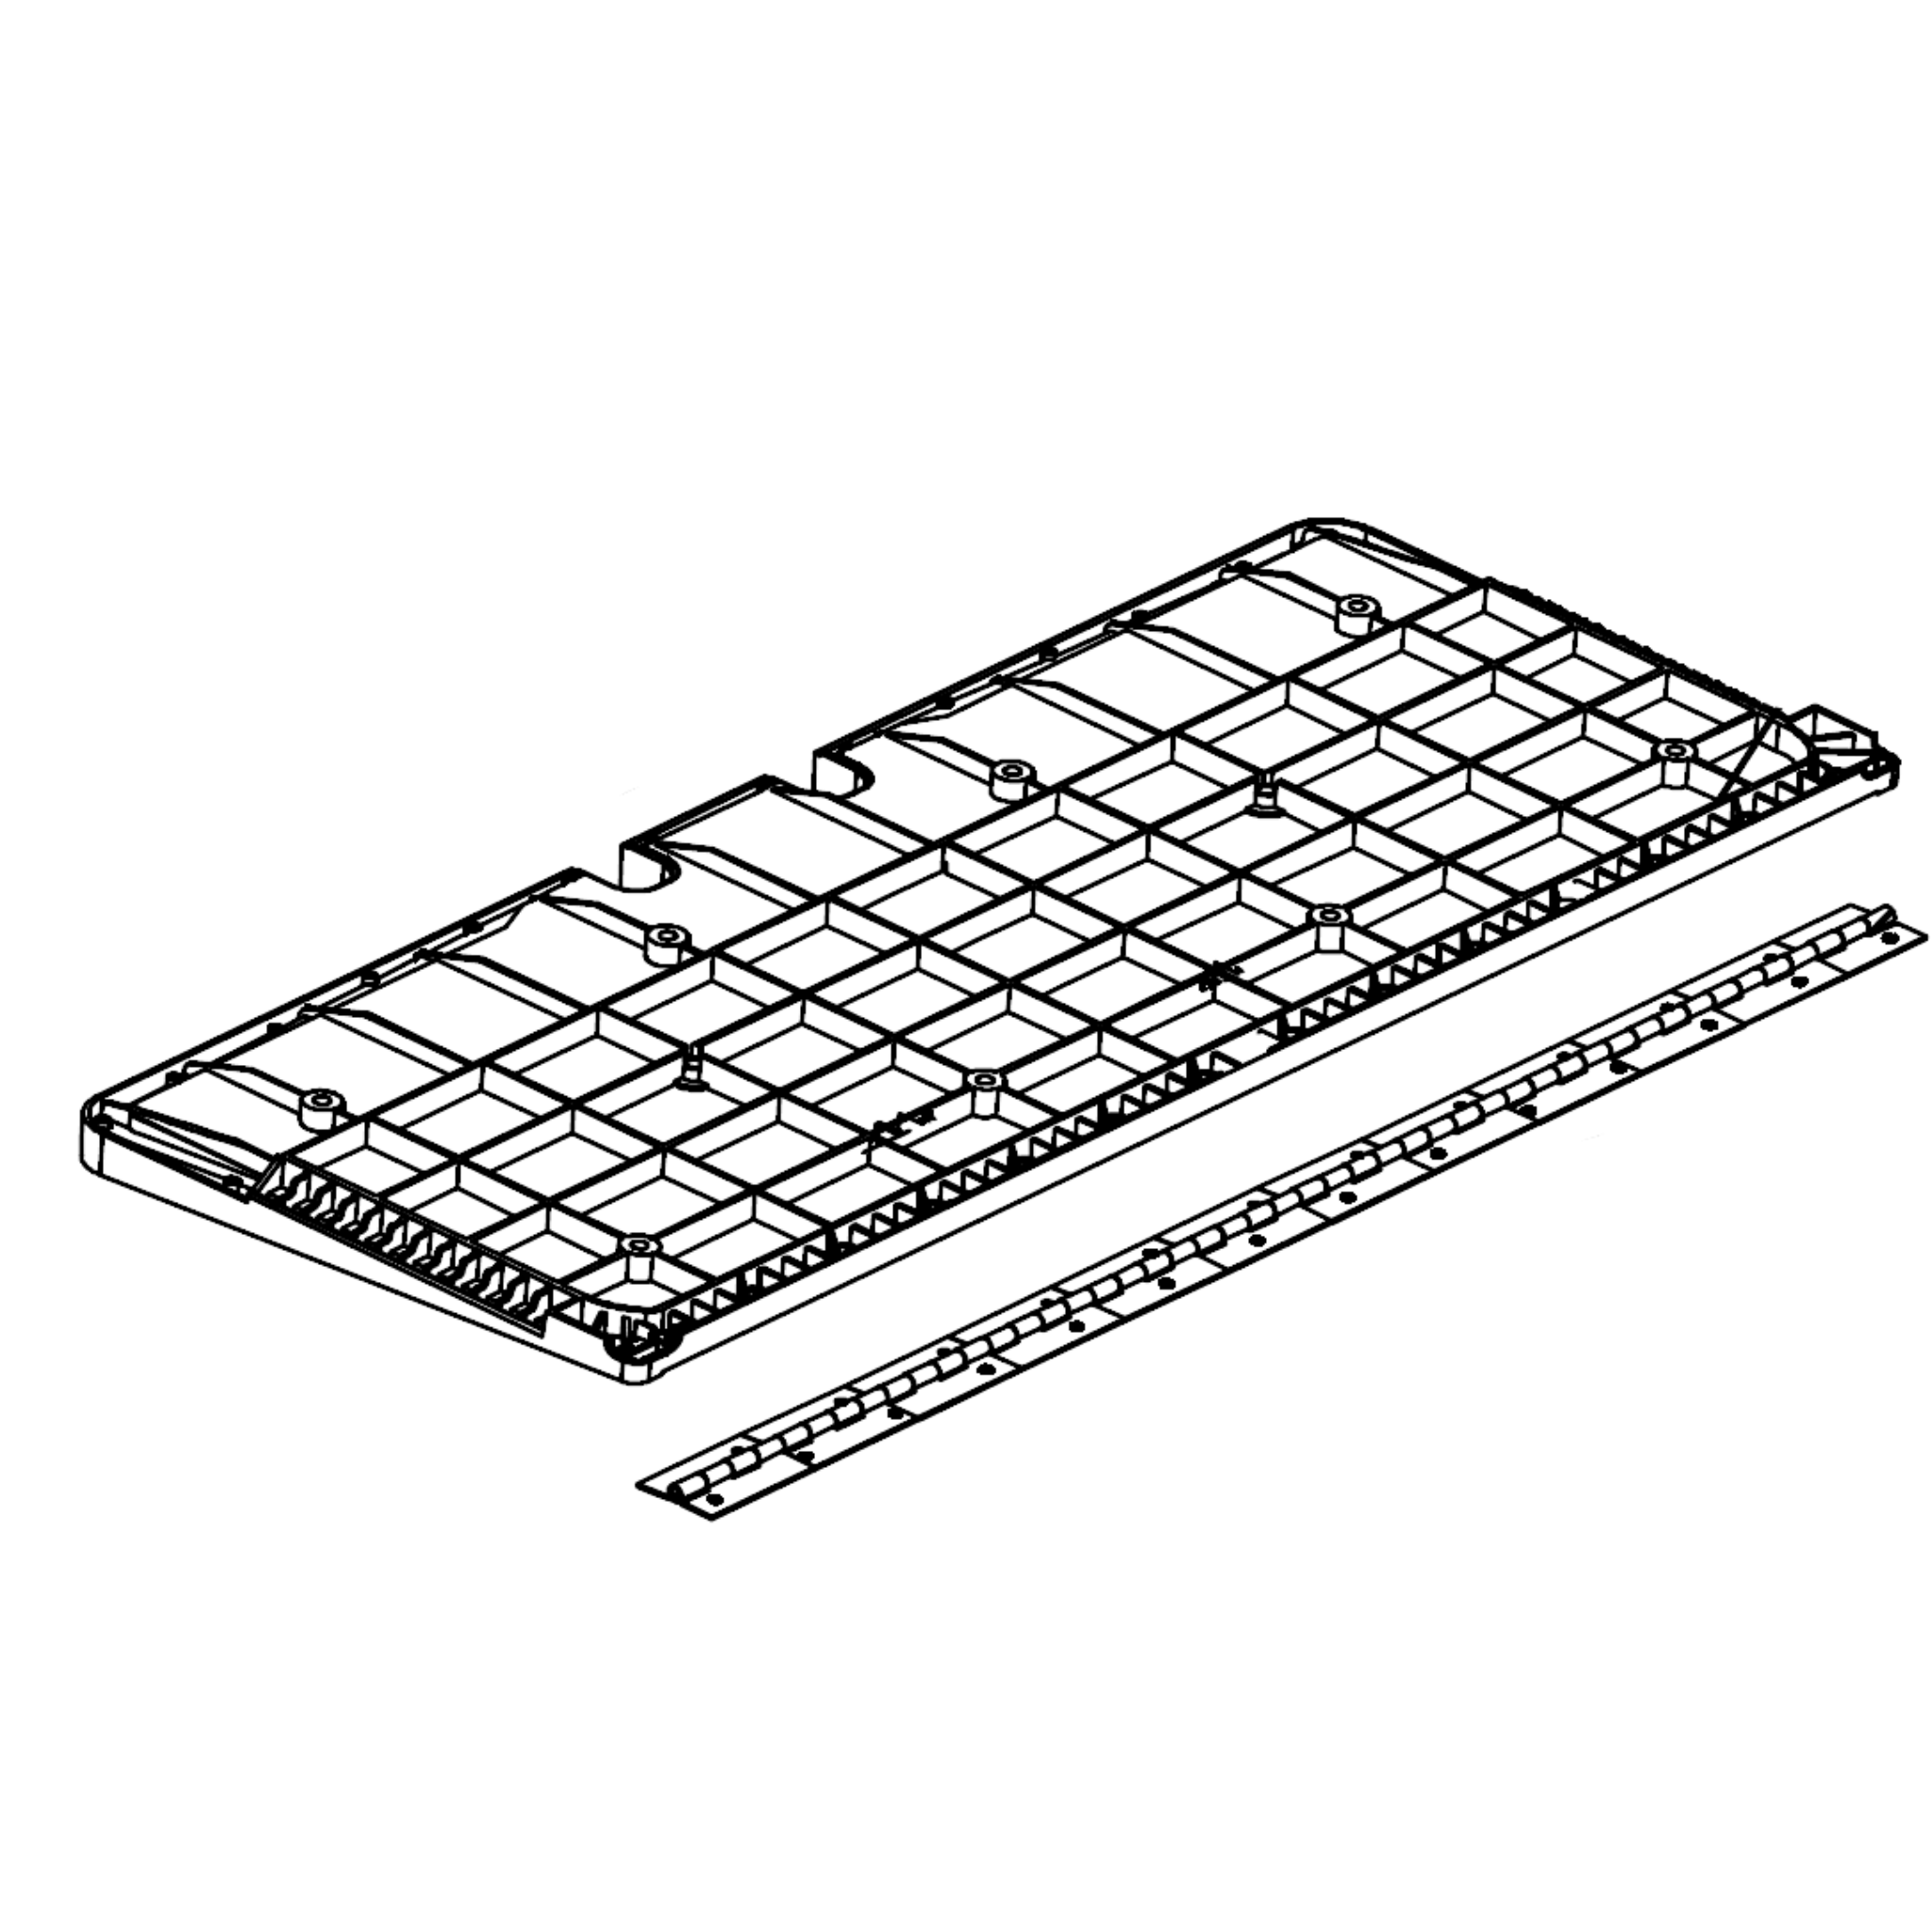 Foldable Rear Sear Turnorer Board Assy